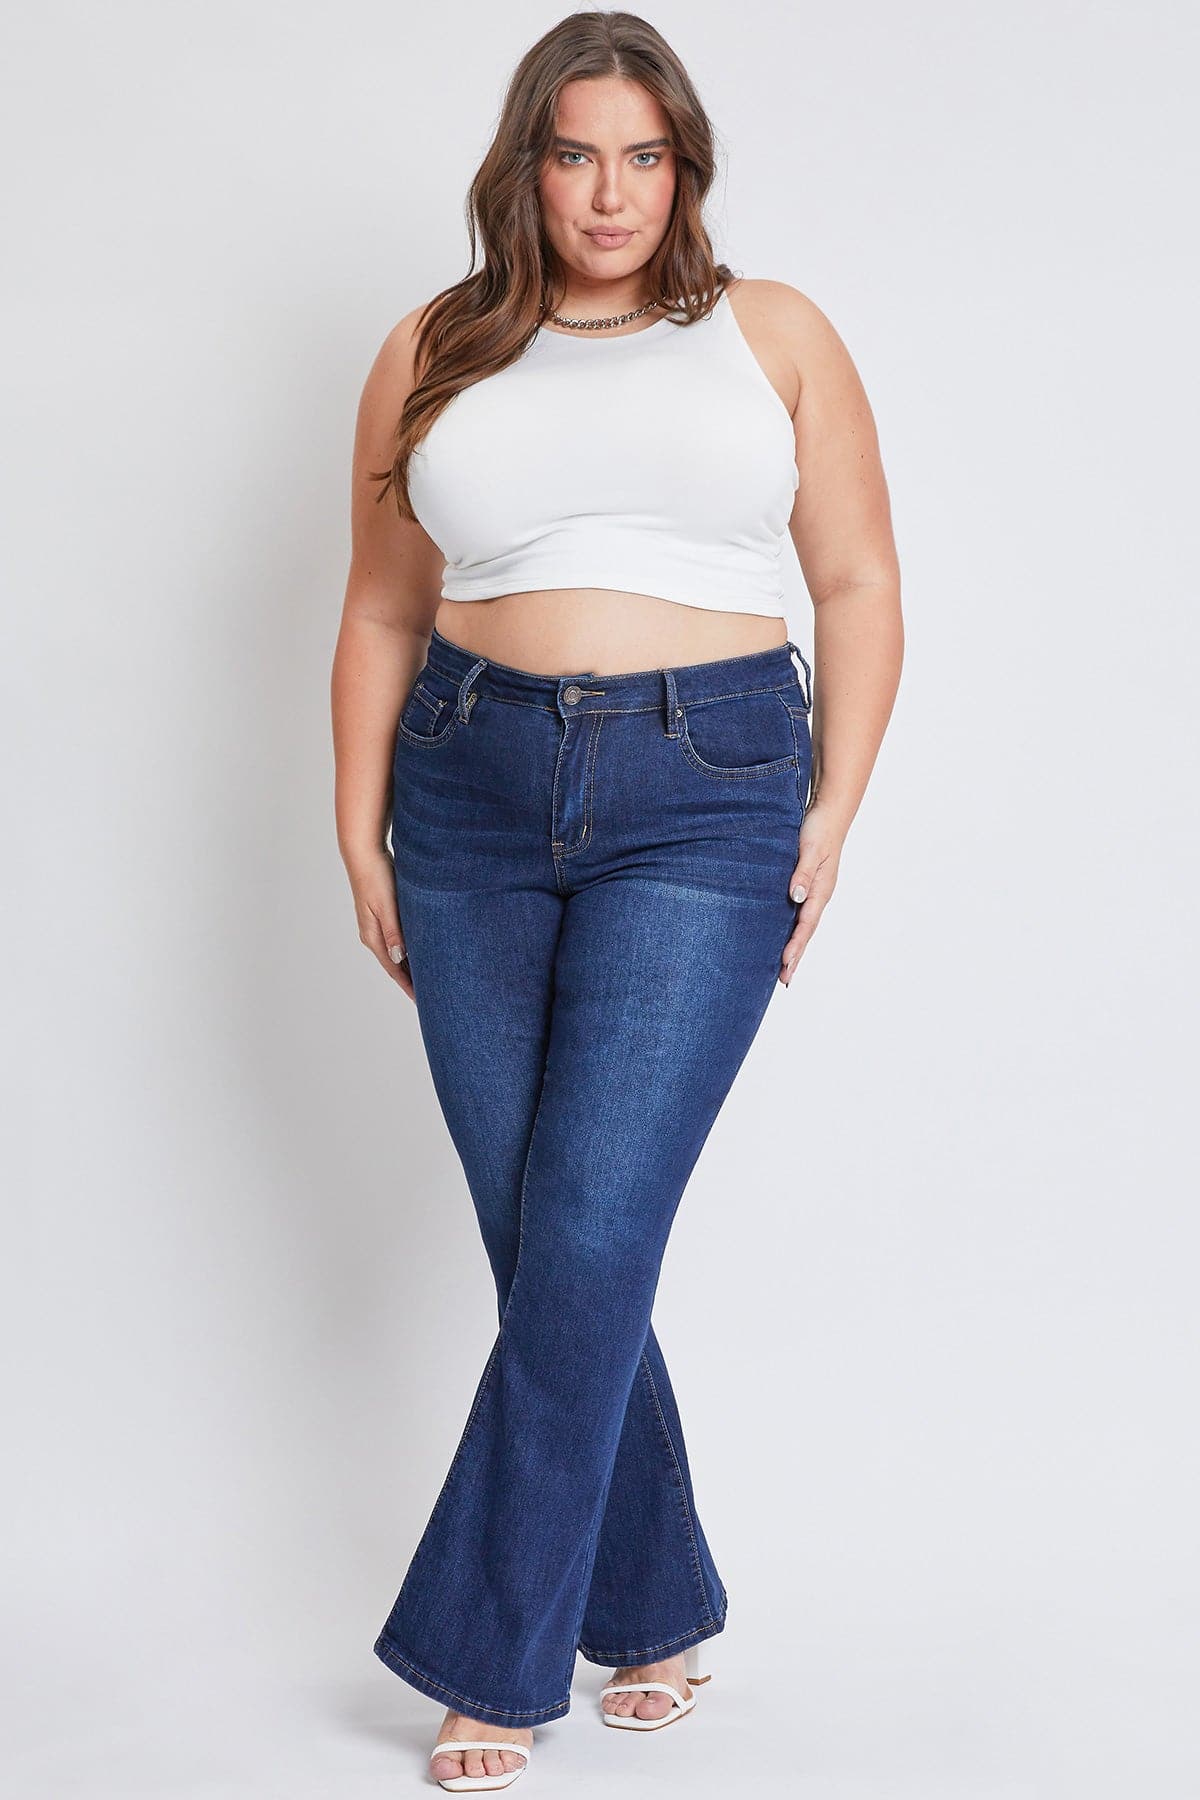 Plus Size Women's Flare Jeans